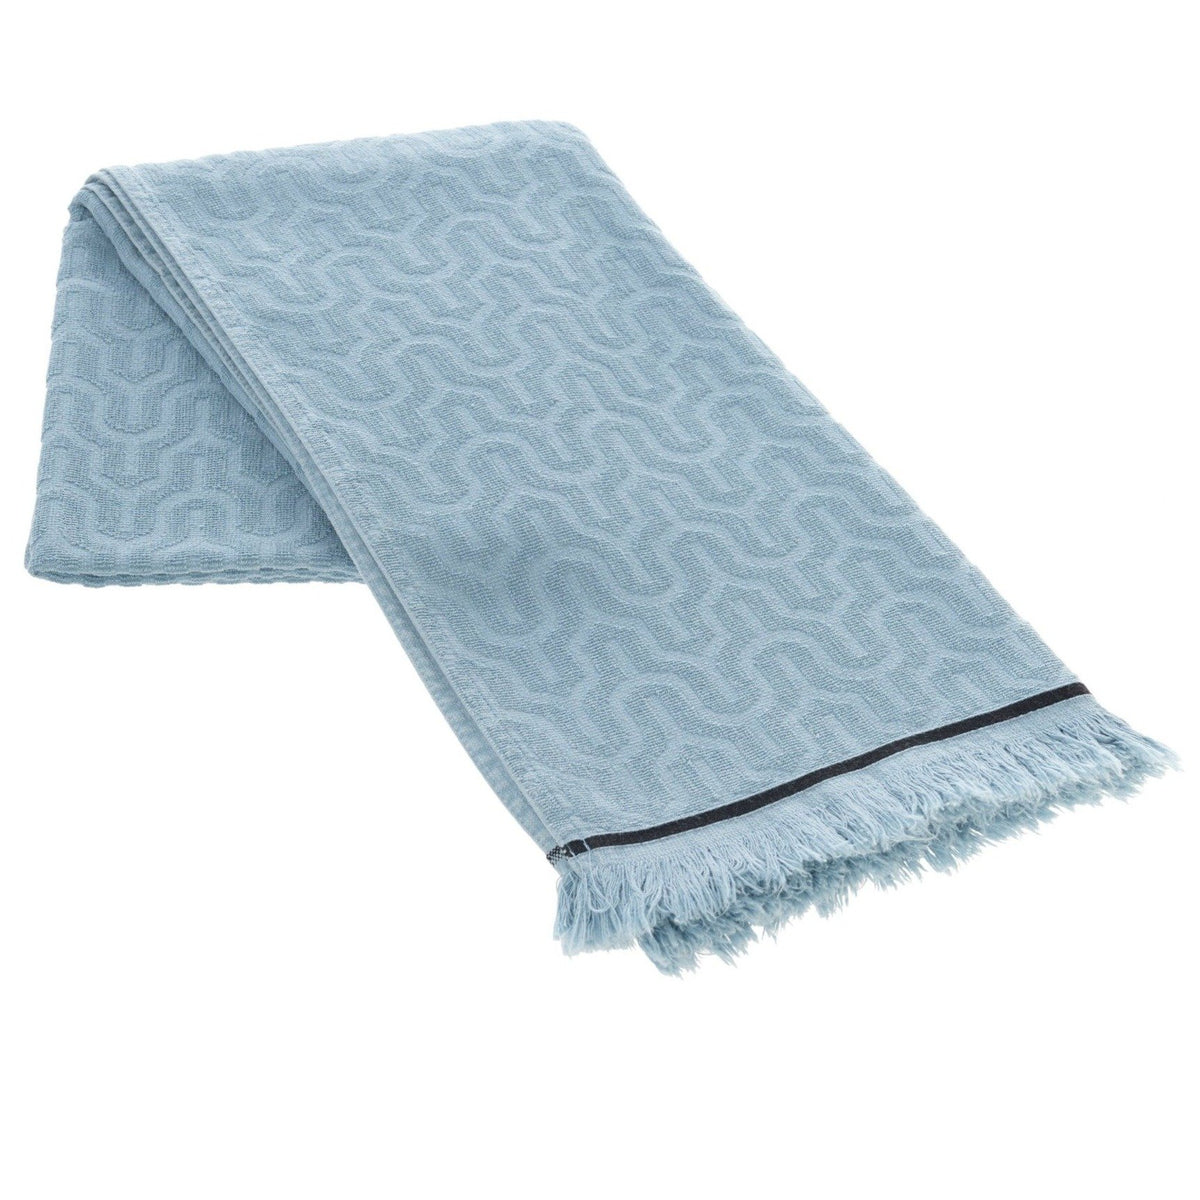 CLEARANCE - Turkish Towel, Iris